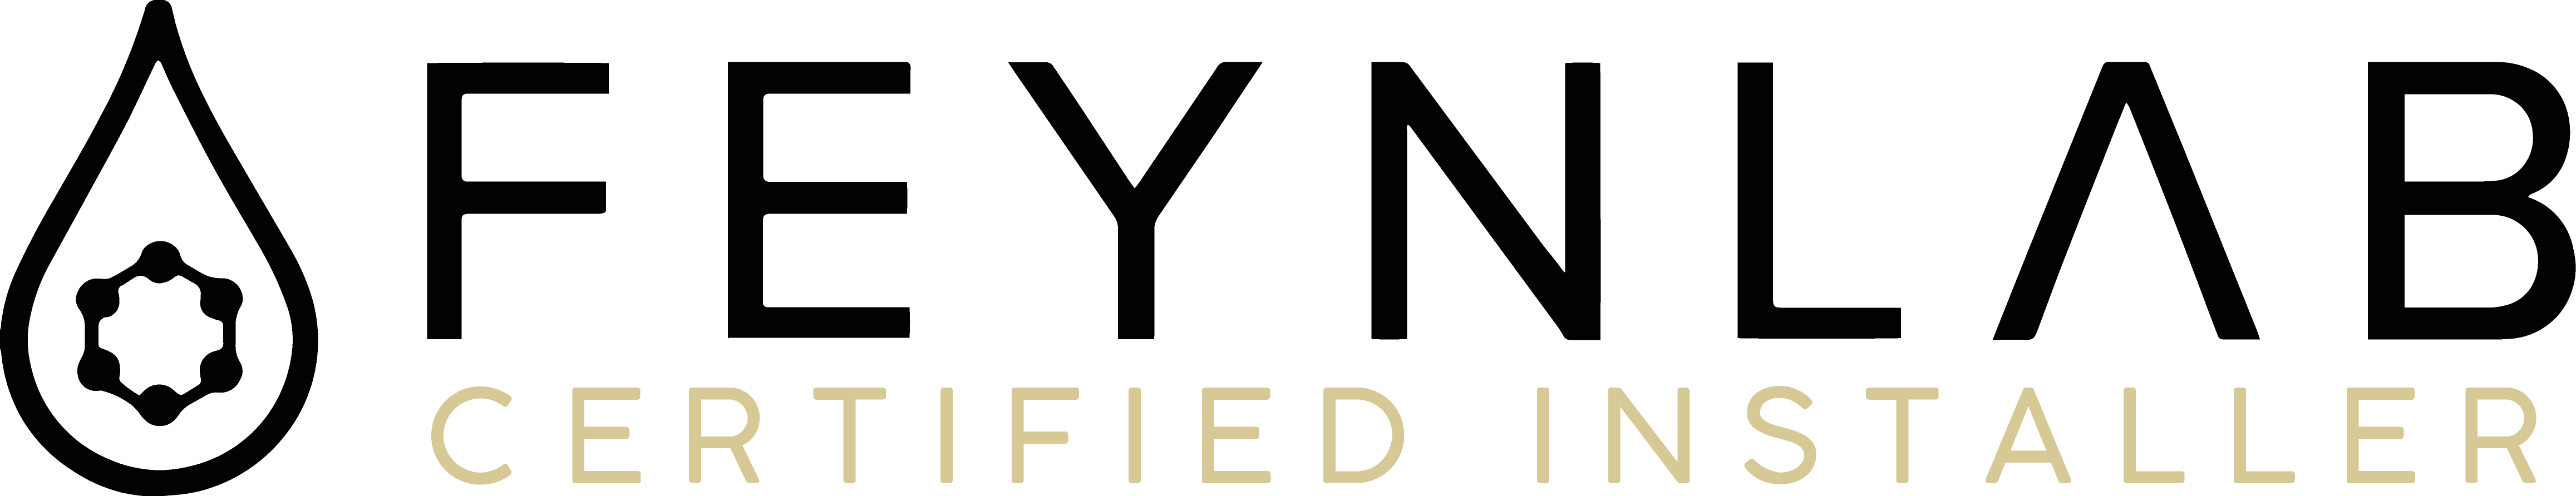 feynlab-certified-installer-gold